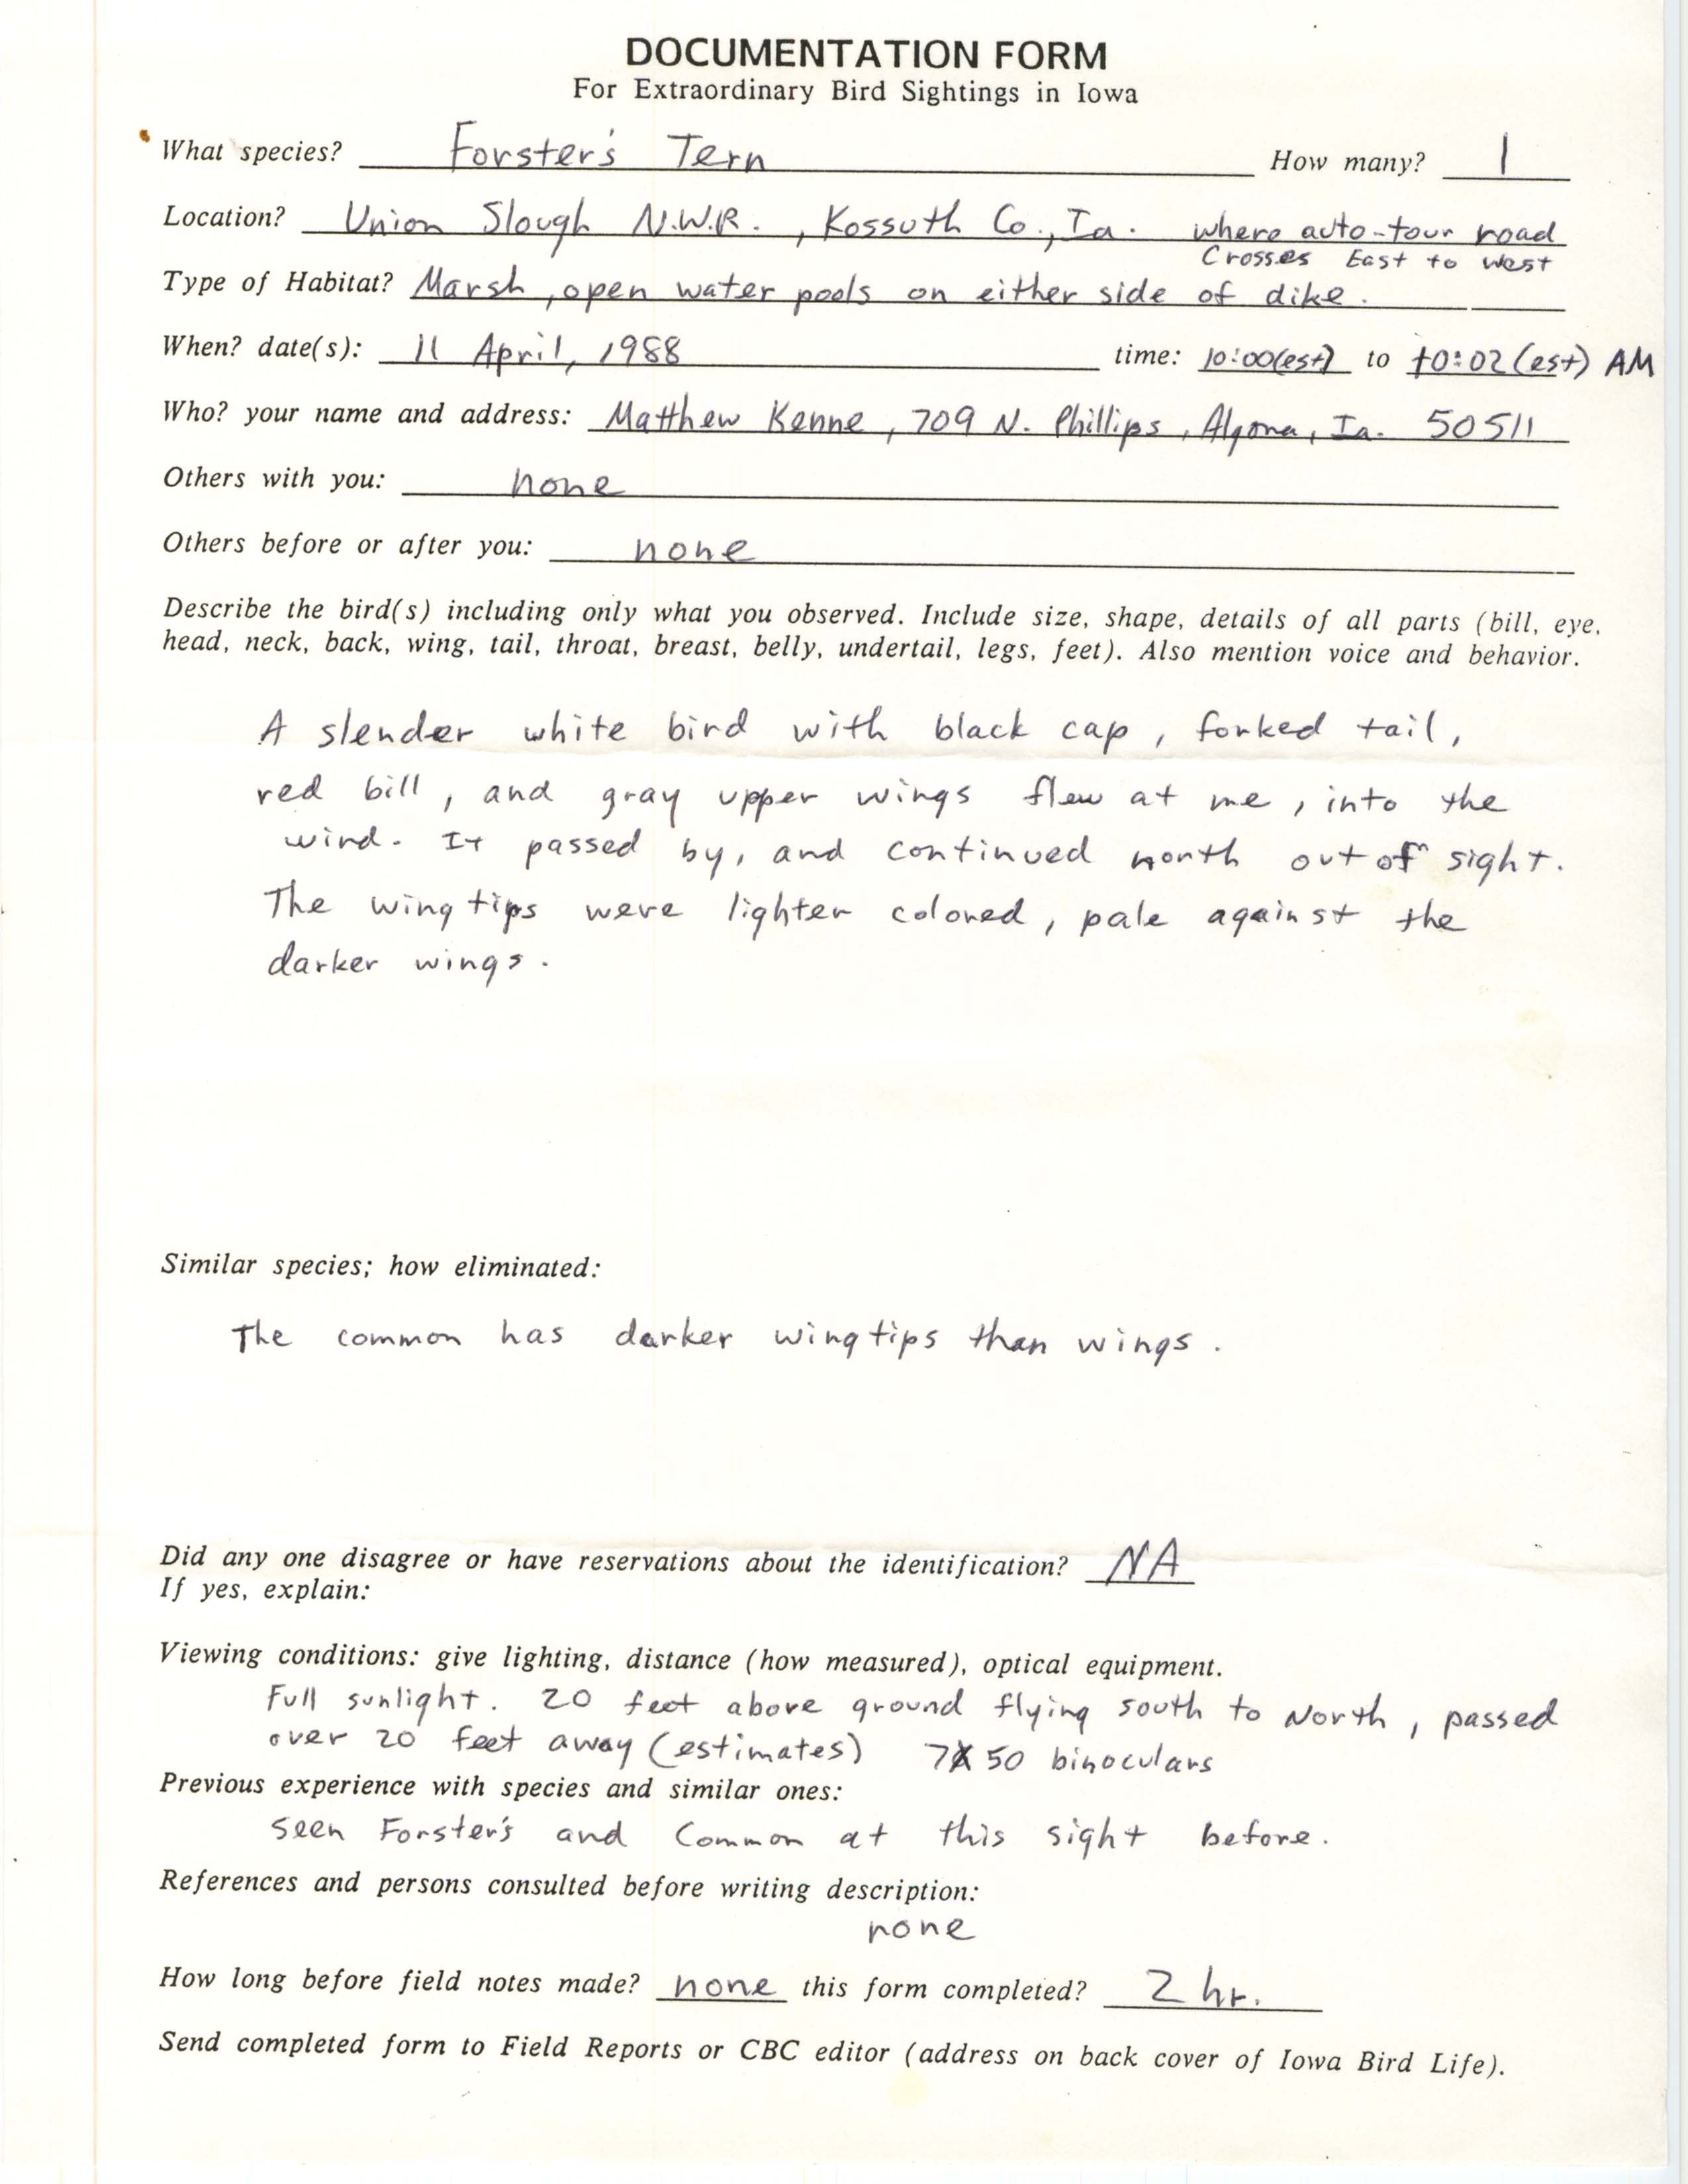 Rare bird documentation form for Forster's Tern at Union Slough National Wildlife Refuge, 1988